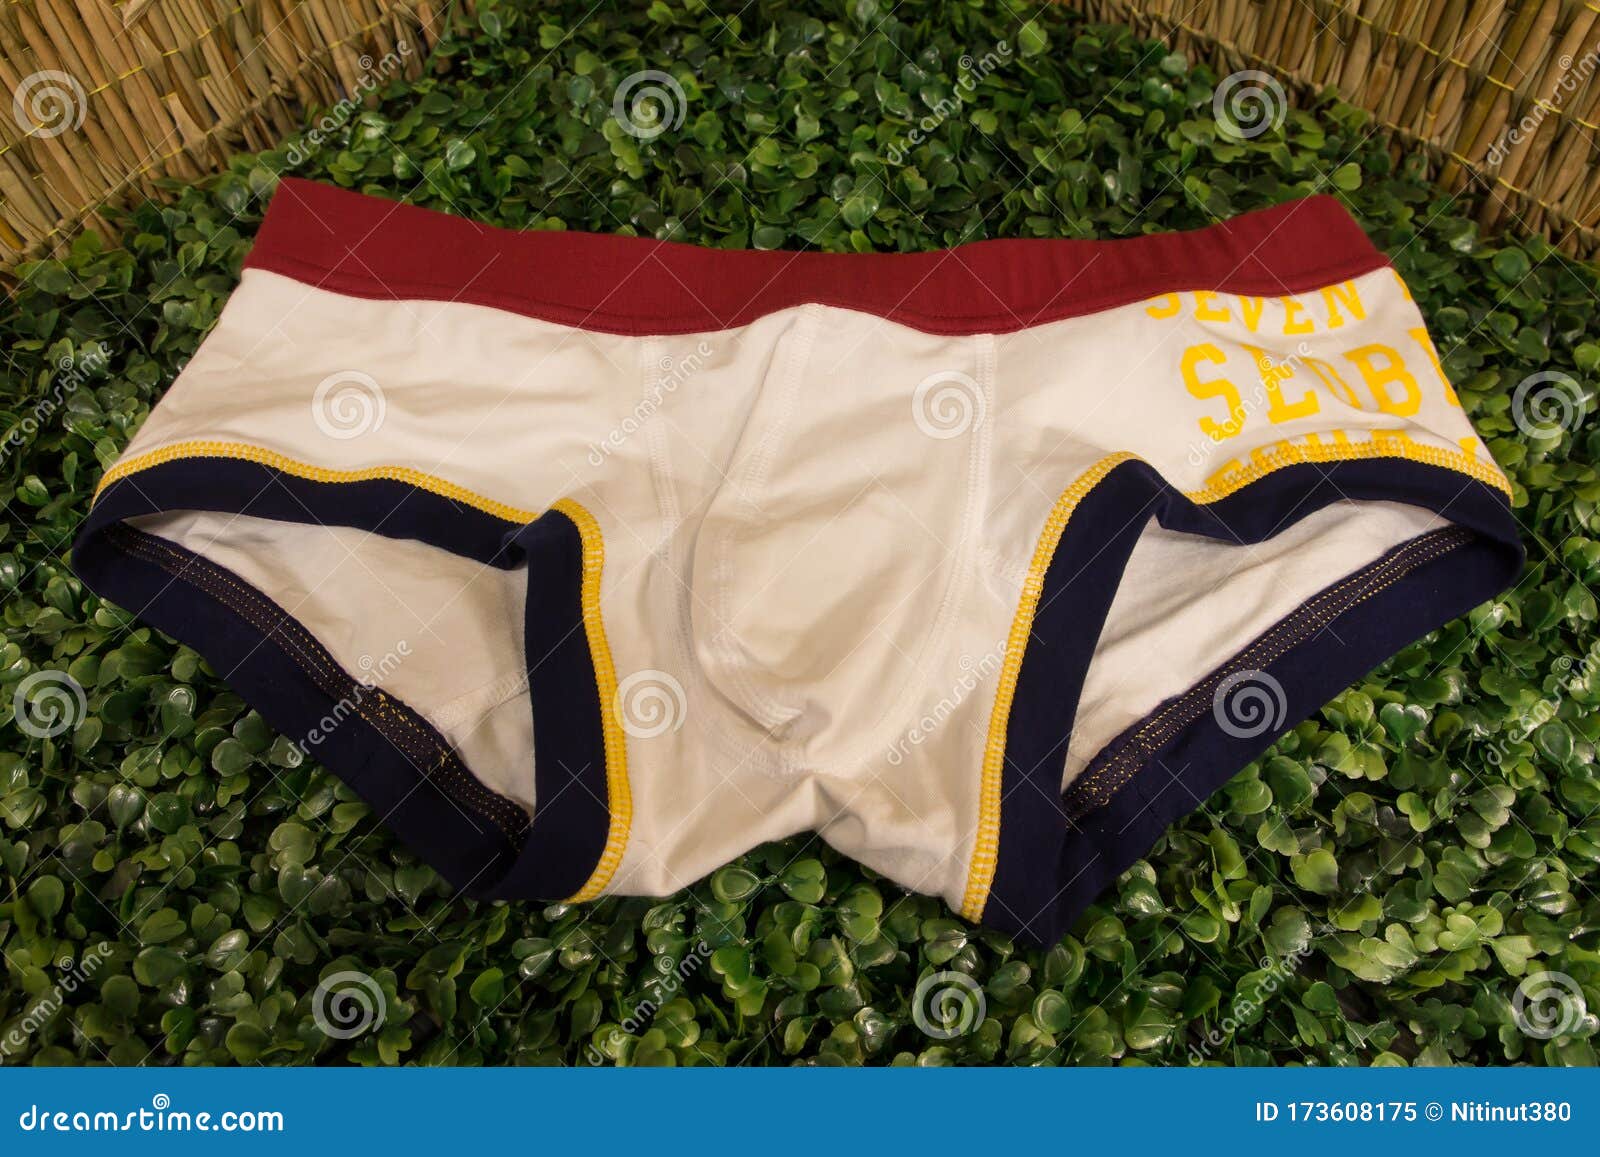 3,700 Black Man Underwear Stock Photos - Free & Royalty-Free Stock Photos  from Dreamstime